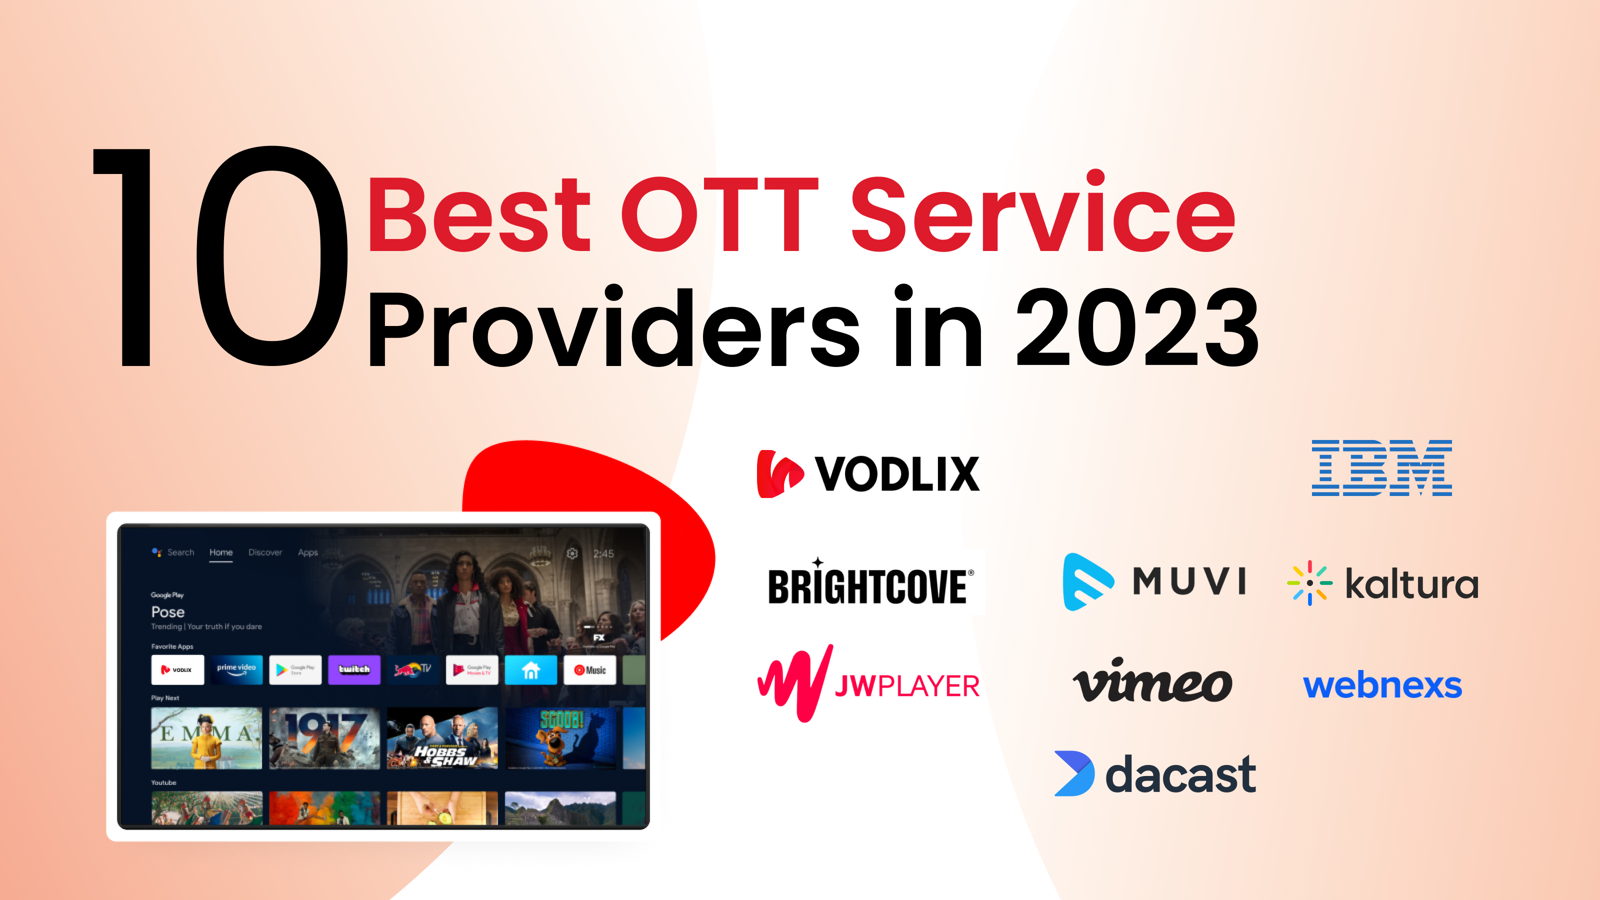 10 Best OTT Service Providers for video creator